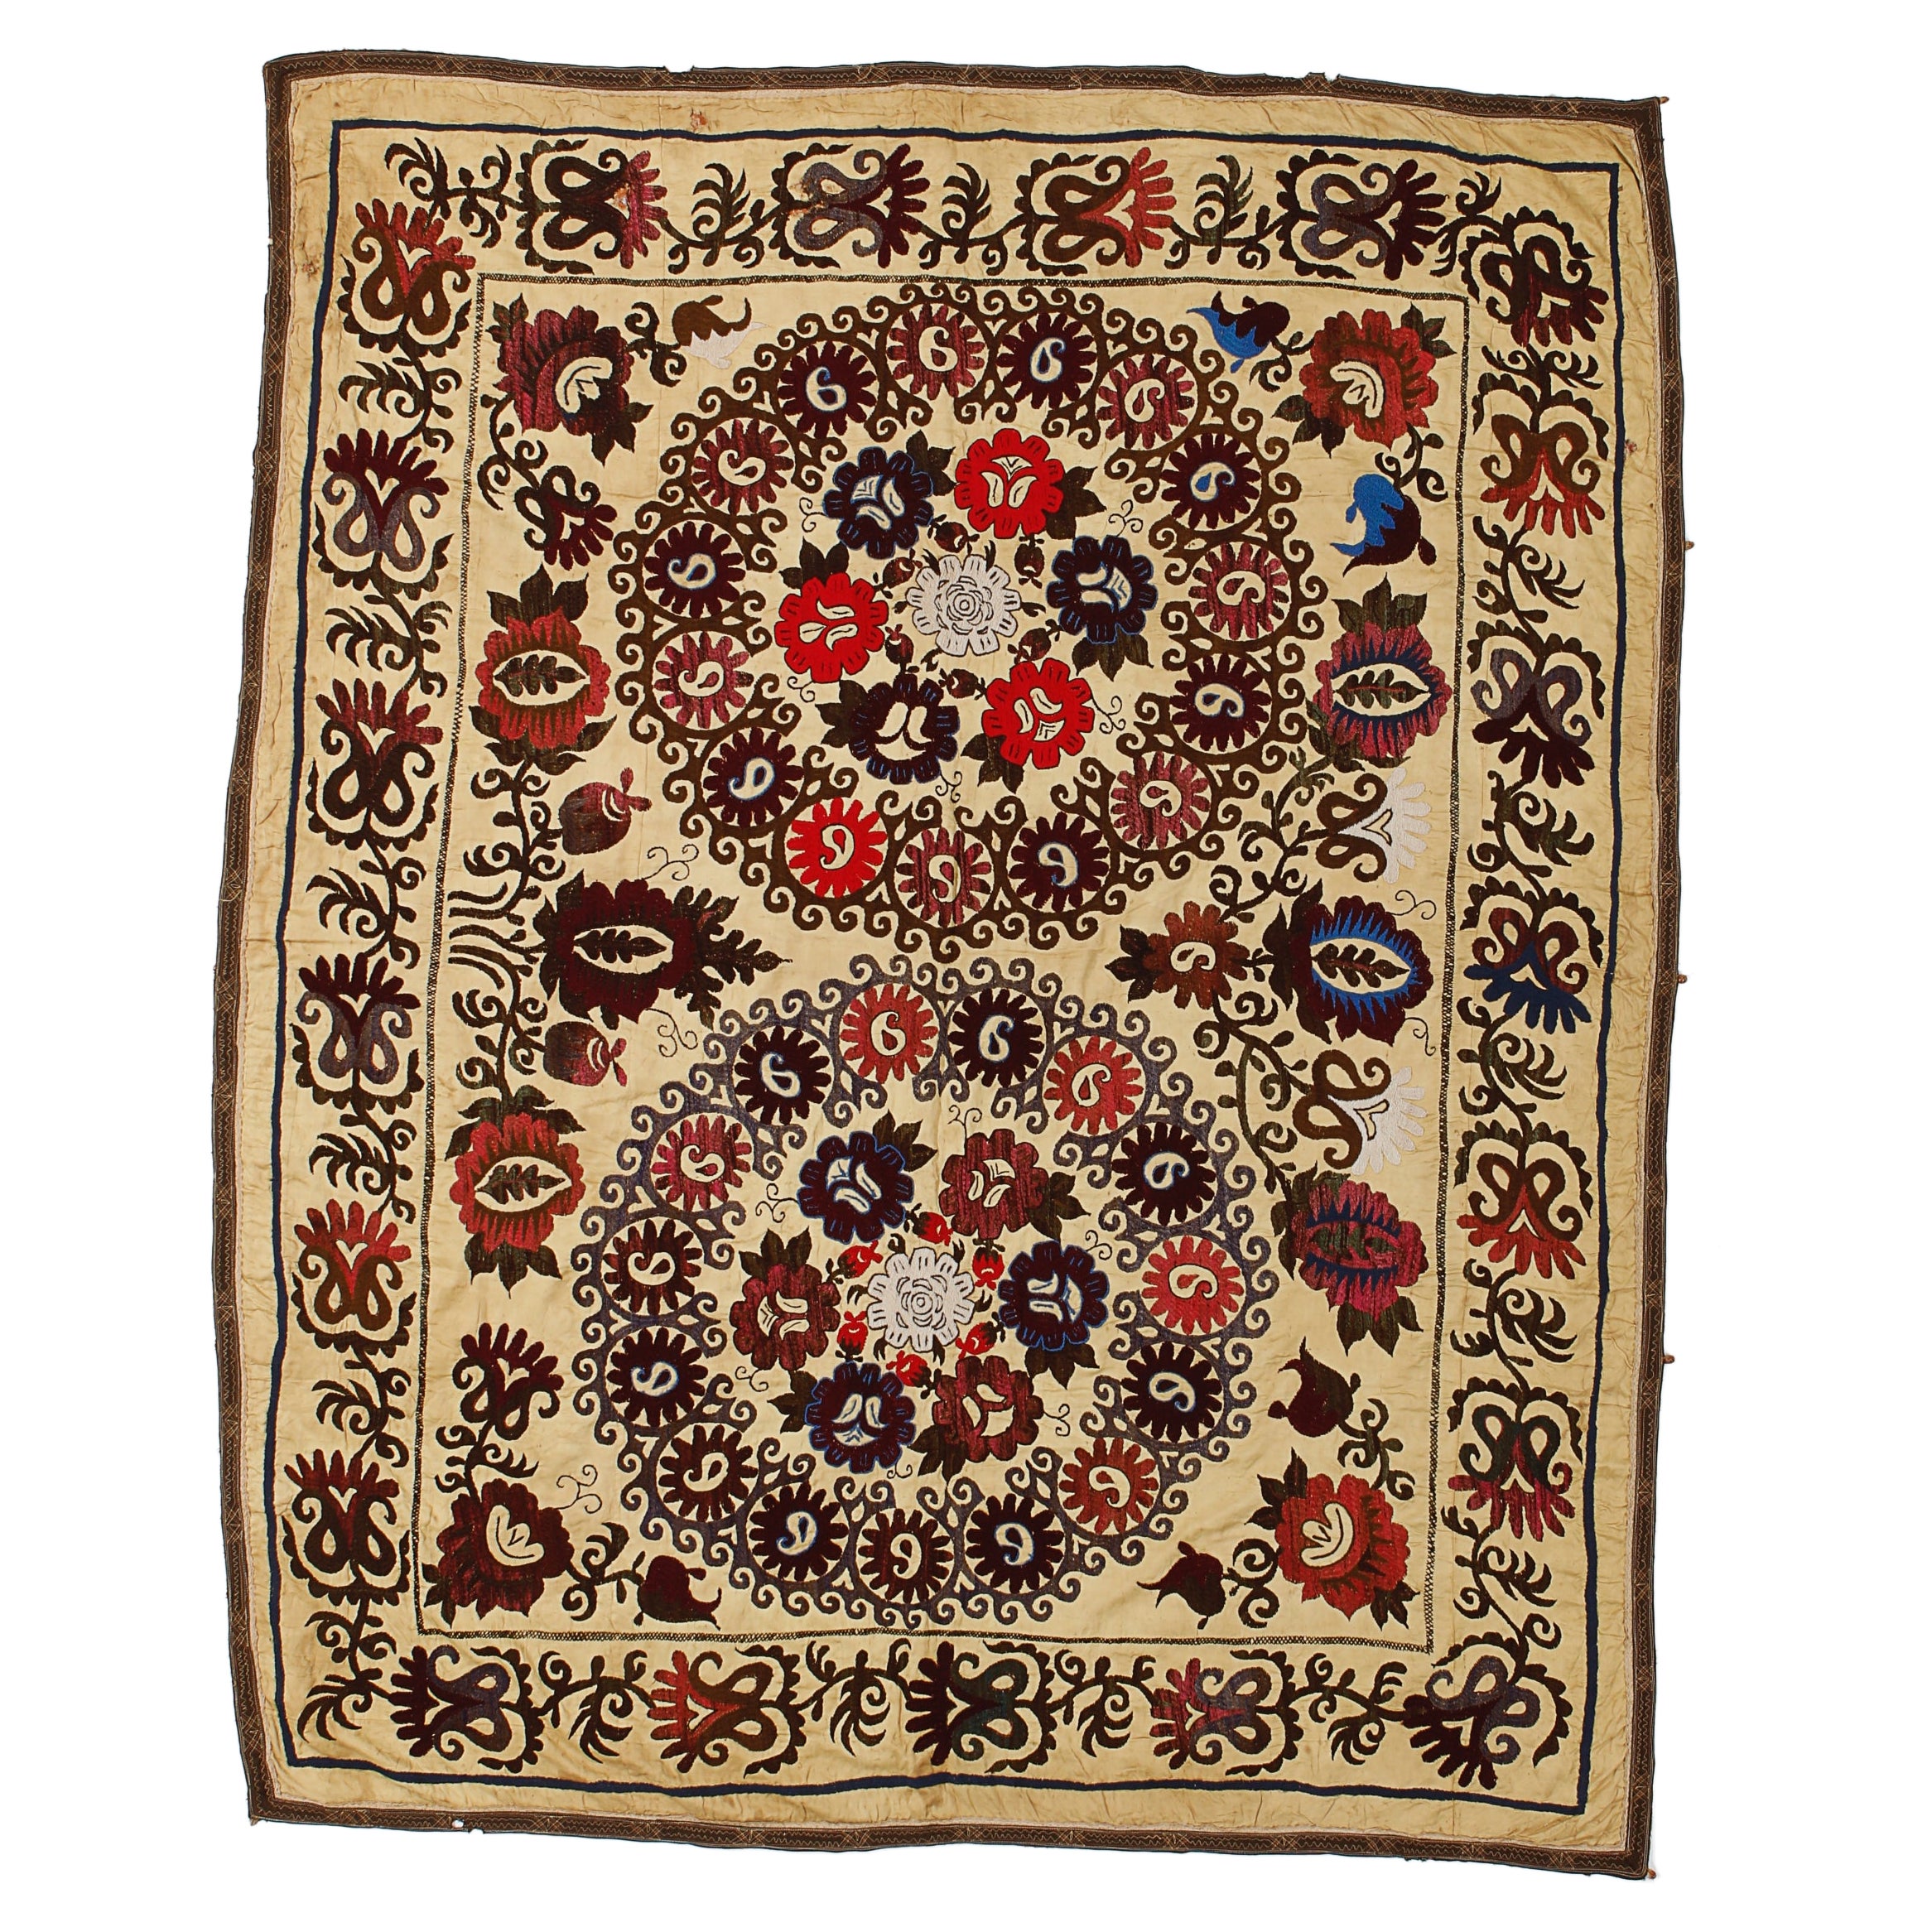 5x6 Ft Embroidered Uzbek "Suzani" Tablecloth, Decorative Silk Wall Hanging